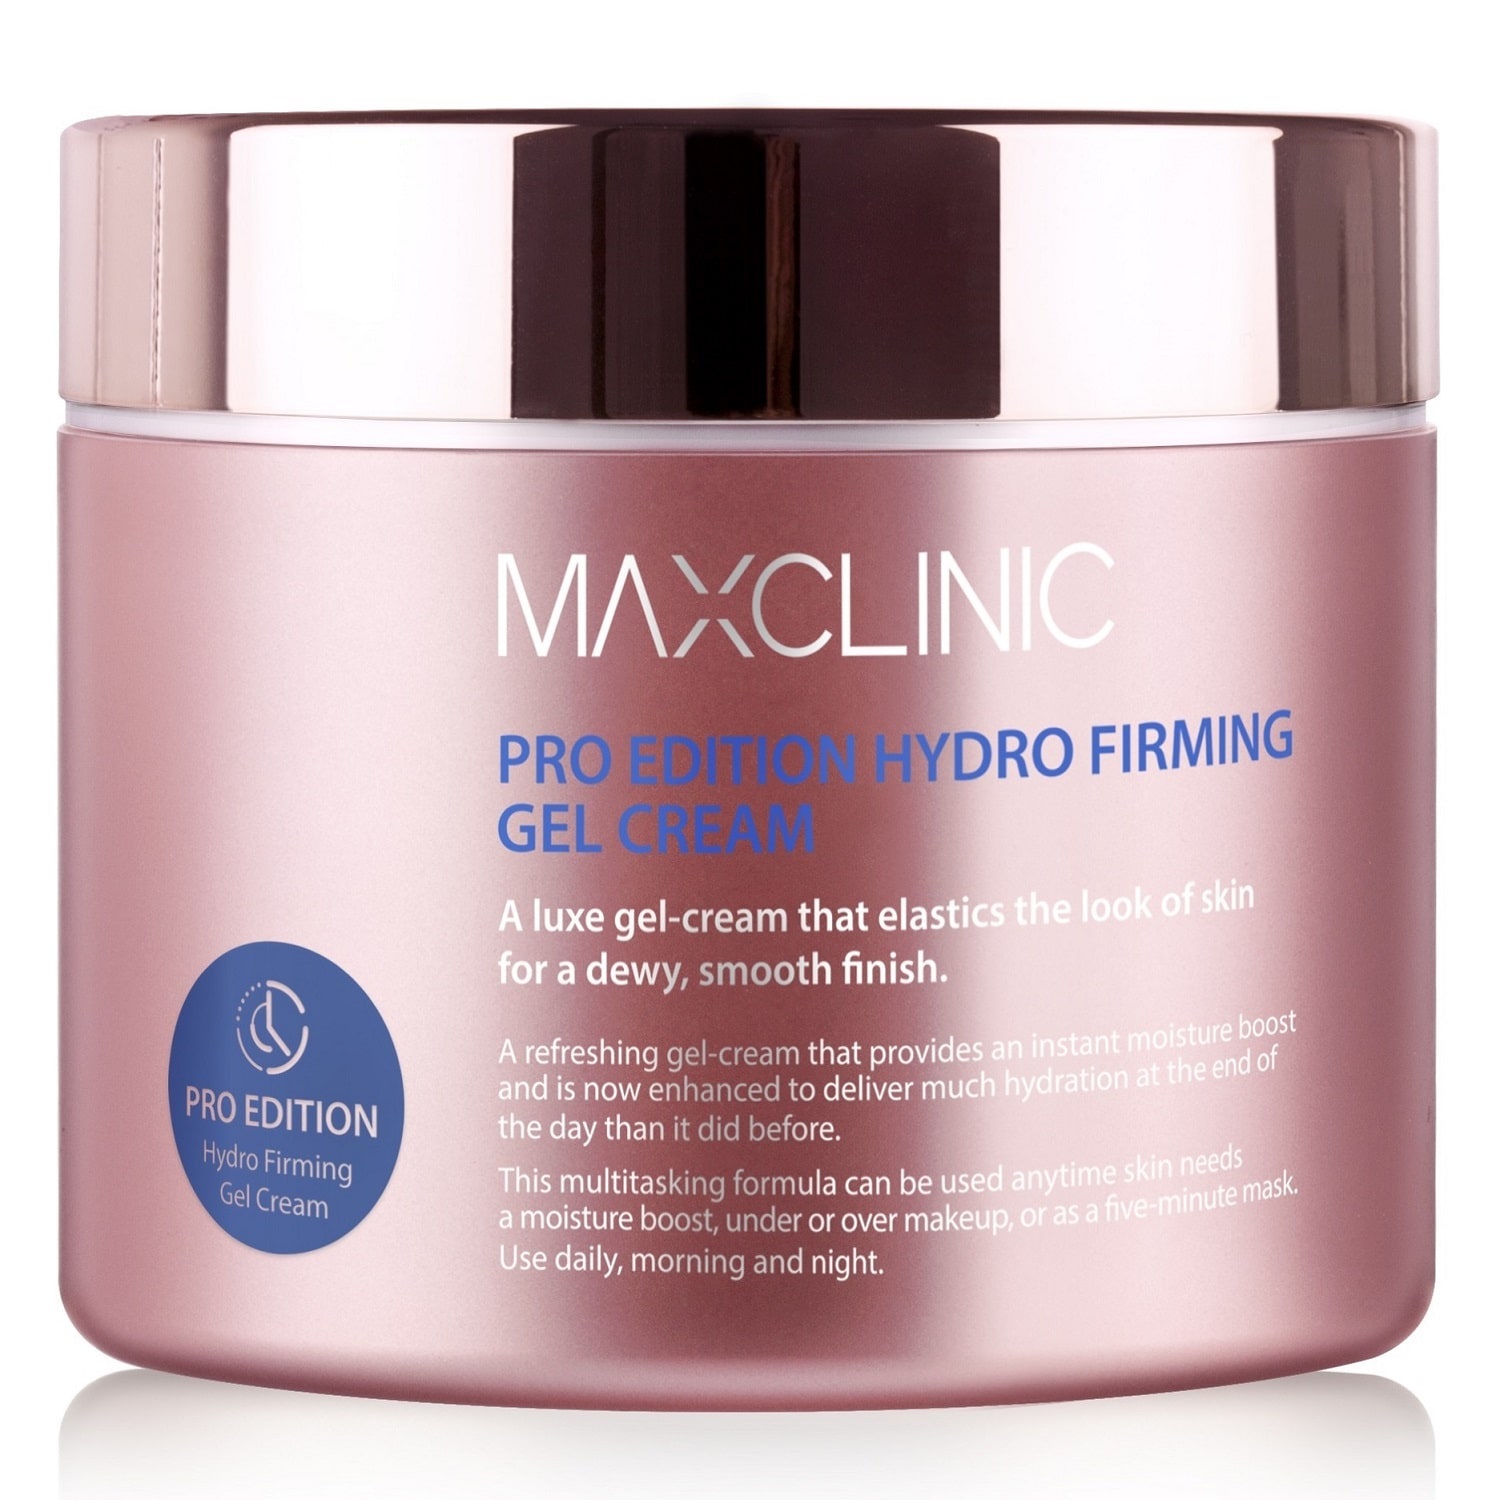 Maxclinic Укрепляющий крем-гель для эластичности и увлажнения кожи Pro-Edition Hydro Firming Gel Cream, 200 г (Maxclinic, Face Care) maxclinic pro edition hydro firming gel toner